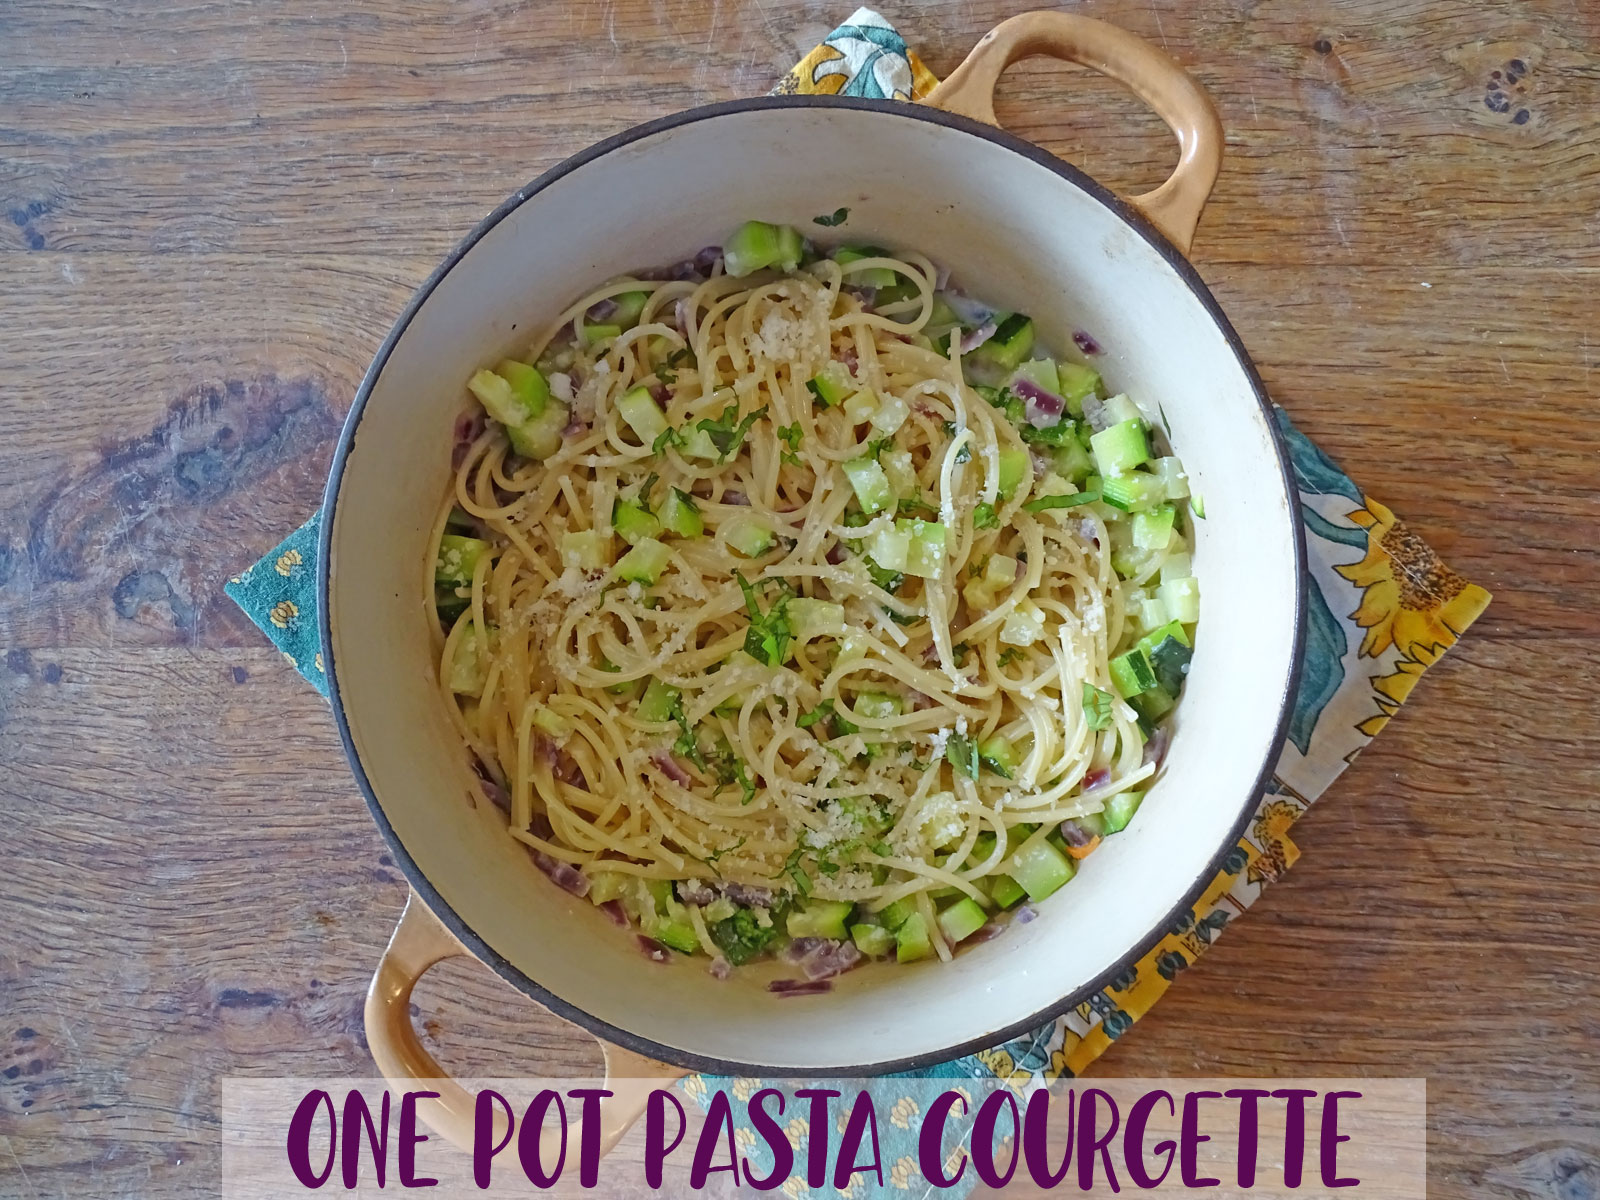 One pot pasta courgette image